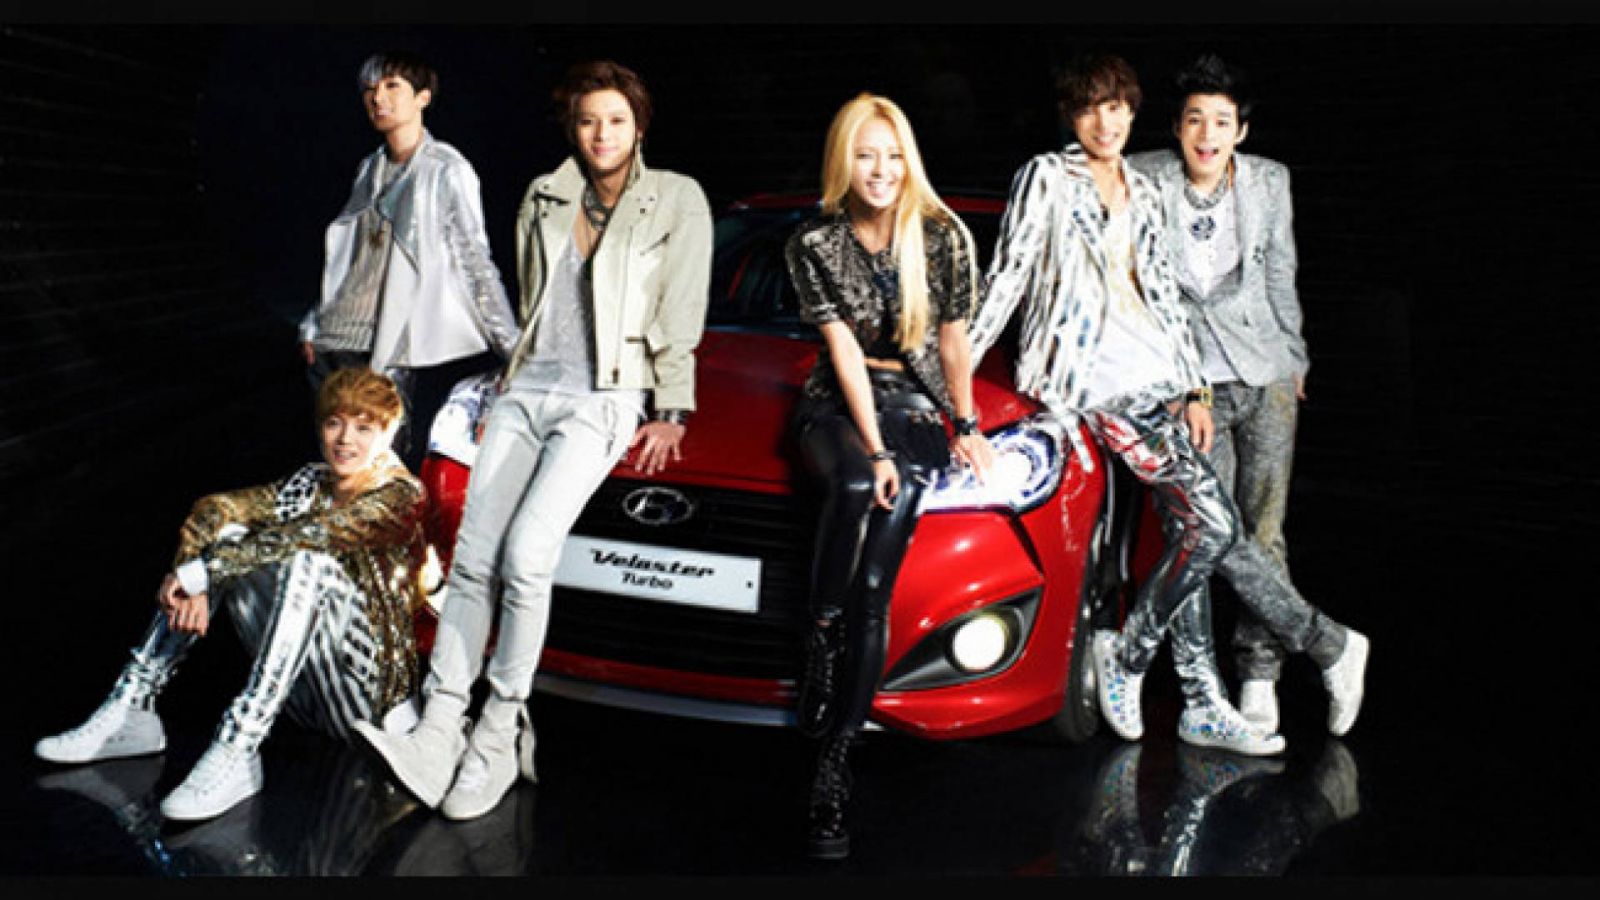 SM apresenta: Younique Unit © SM Entertainment/Hyundai Motor Company